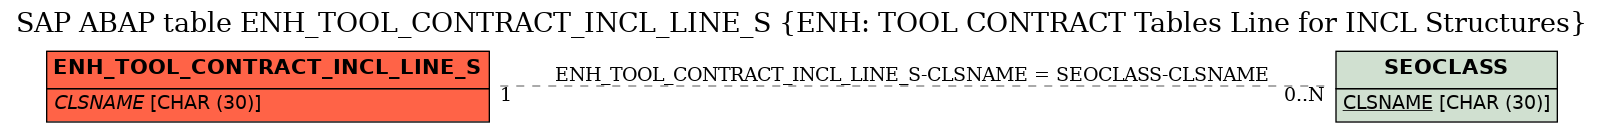 E-R Diagram for table ENH_TOOL_CONTRACT_INCL_LINE_S (ENH: TOOL CONTRACT Tables Line for INCL Structures)